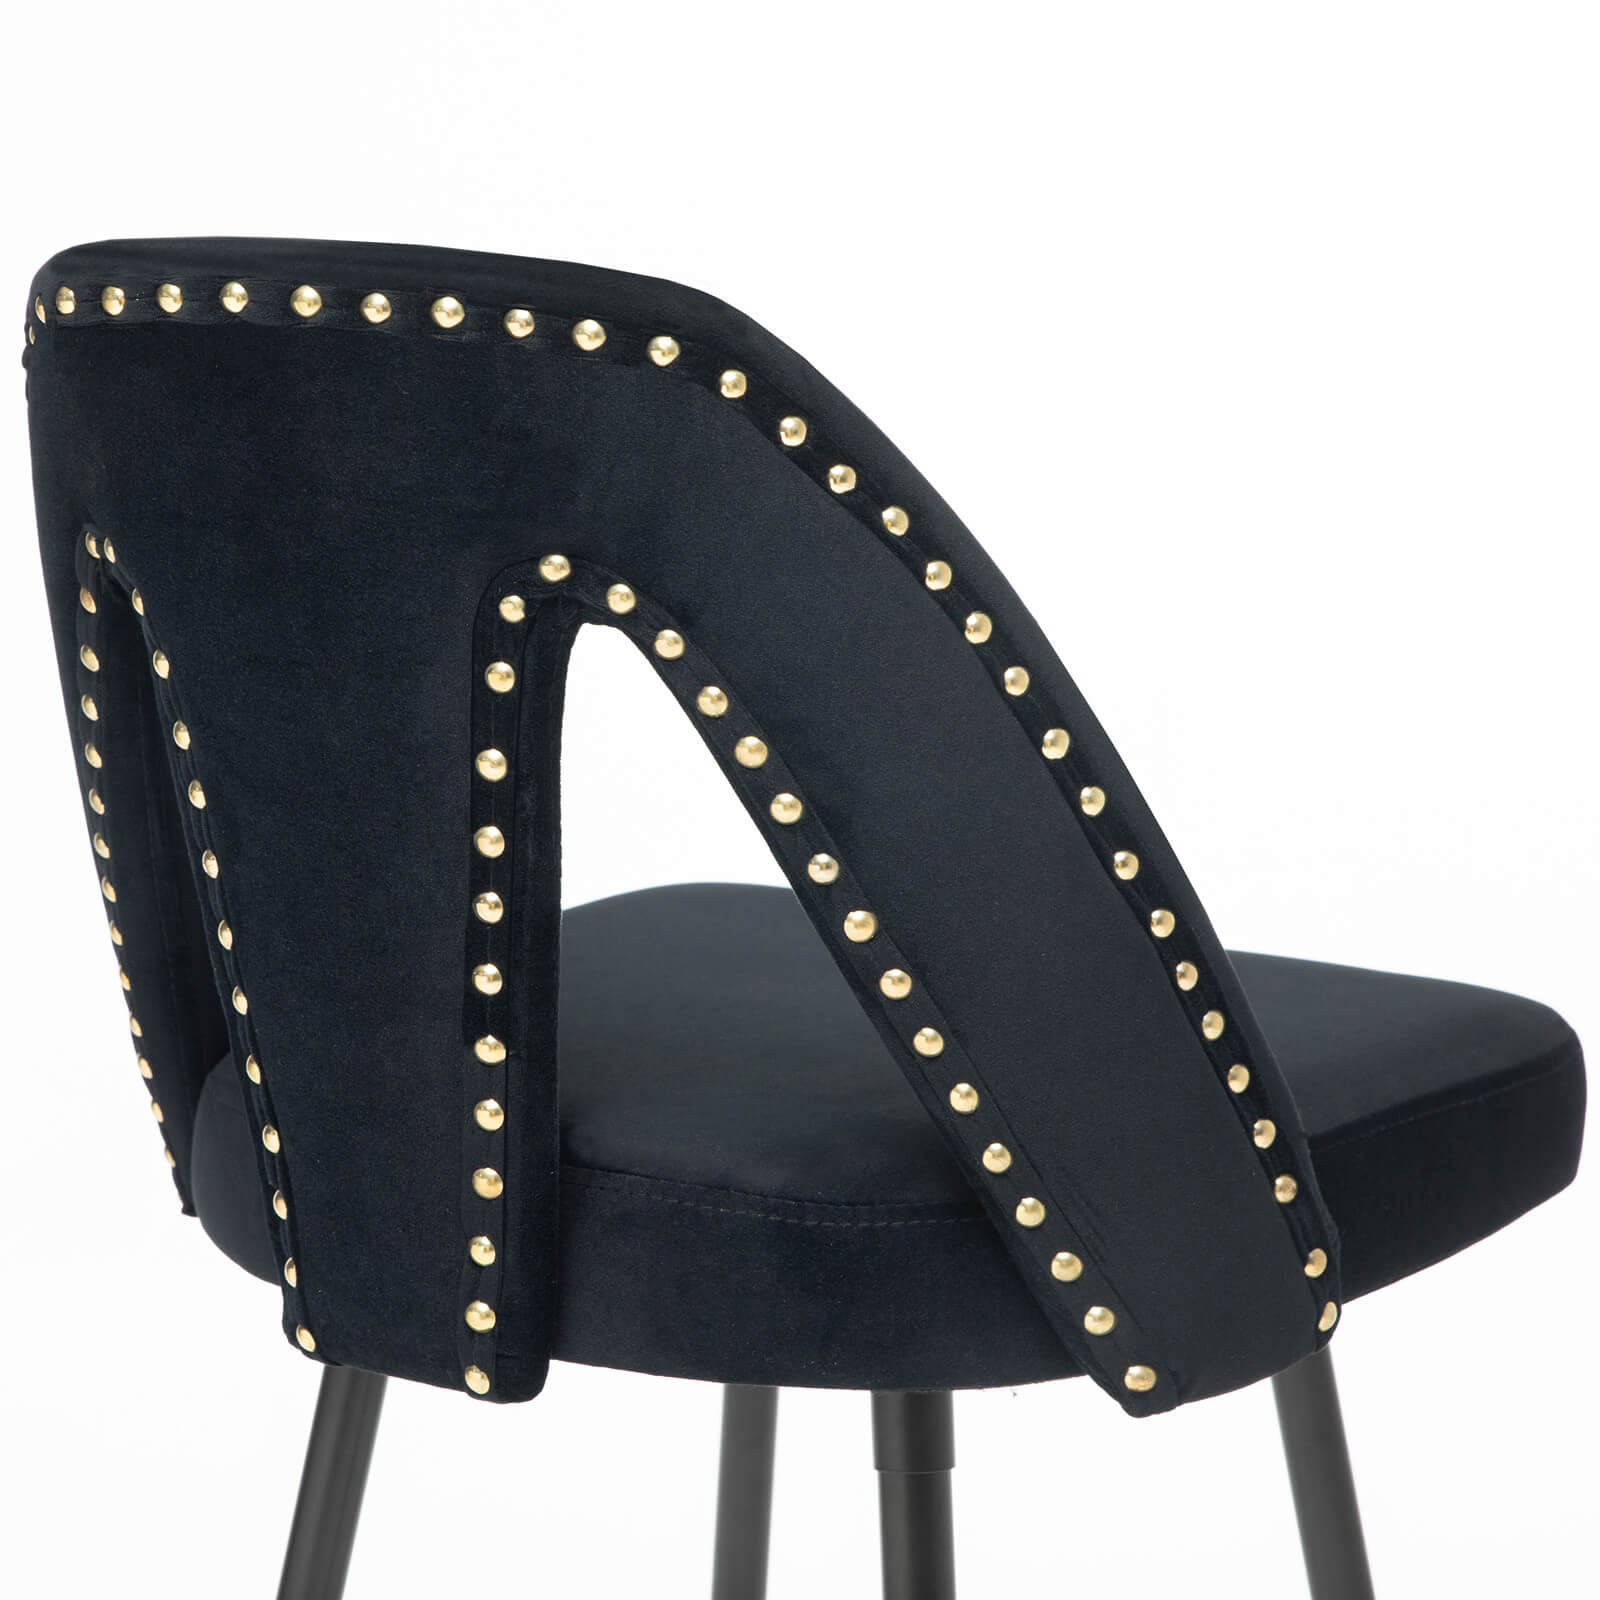 Heidi kitchen breakfast bar stools counter height chairs velvet with backs | Lemroe